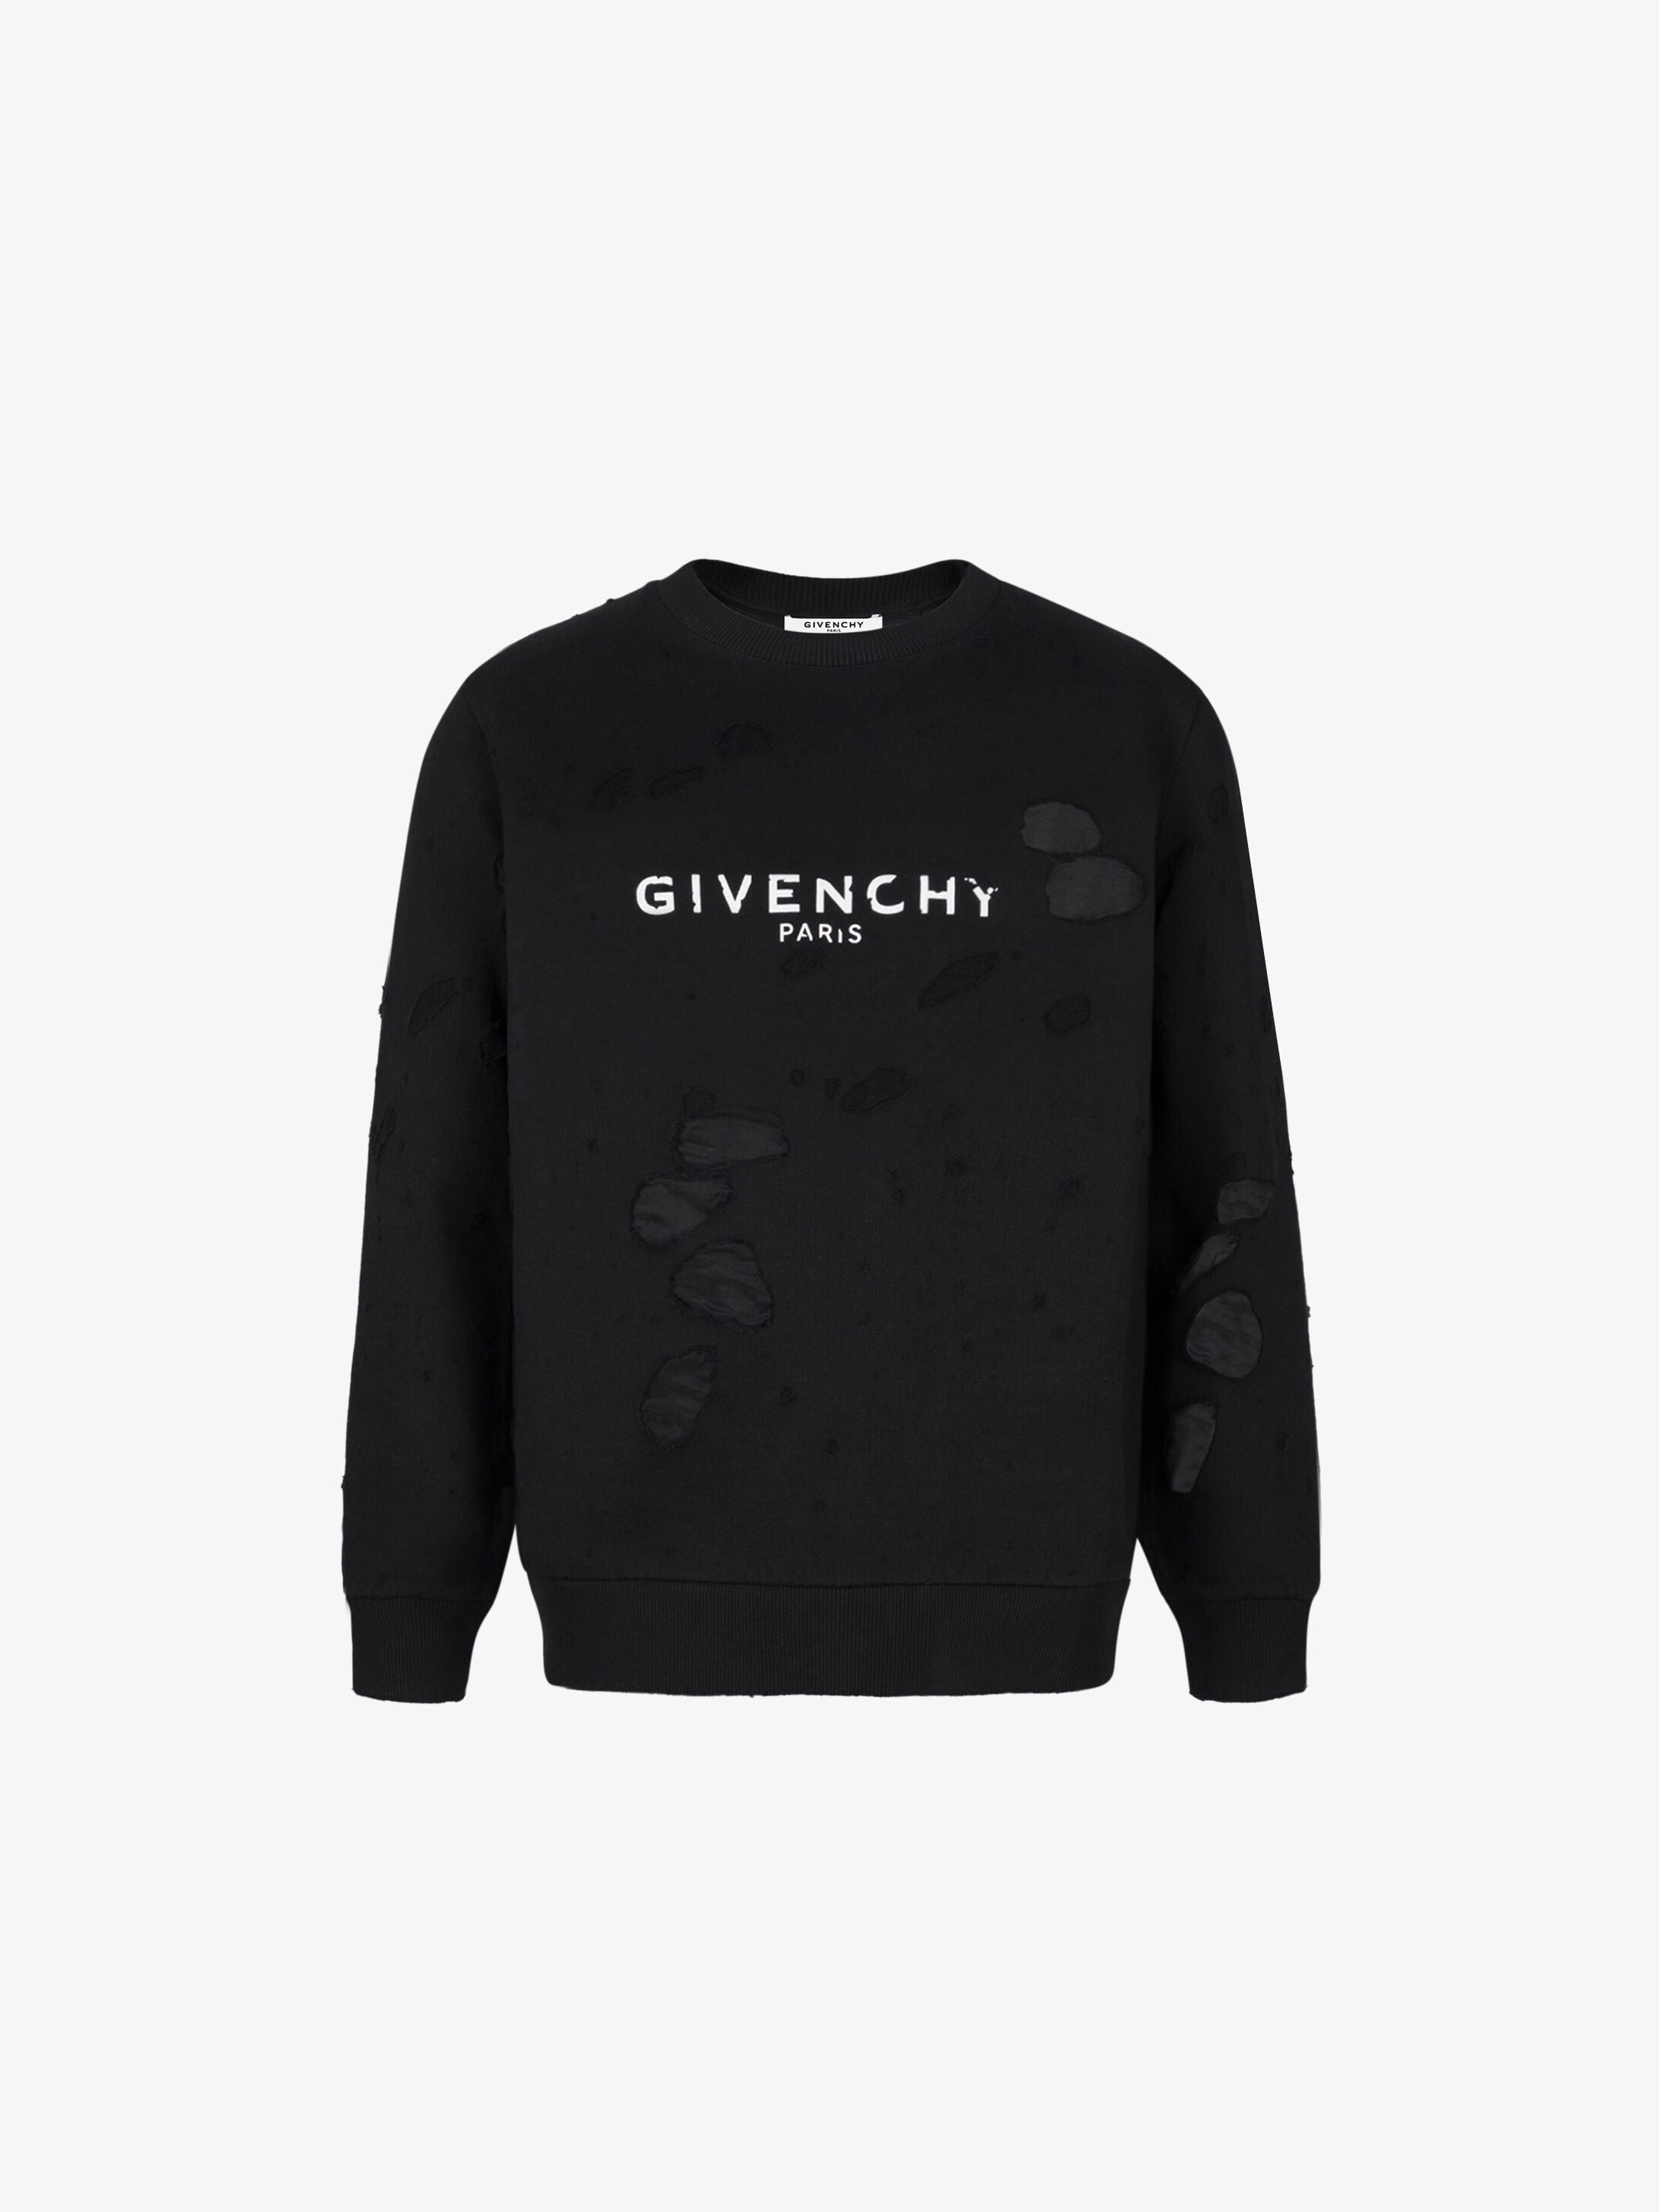 Givenchy PARIS destroyed sweatshirt 